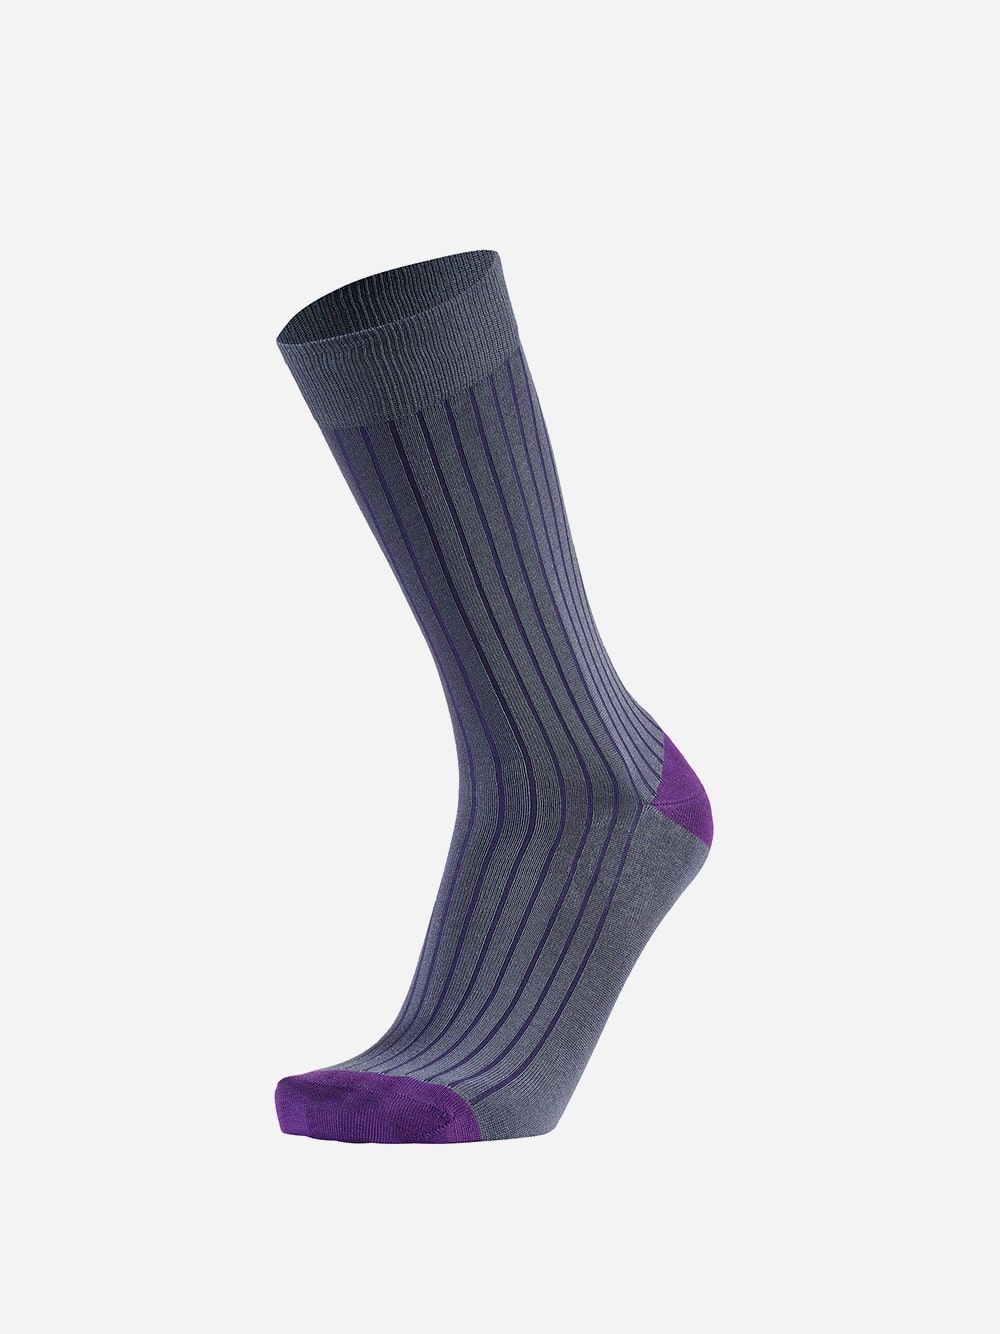 Grey Socks Hidden Stripes | Westmister